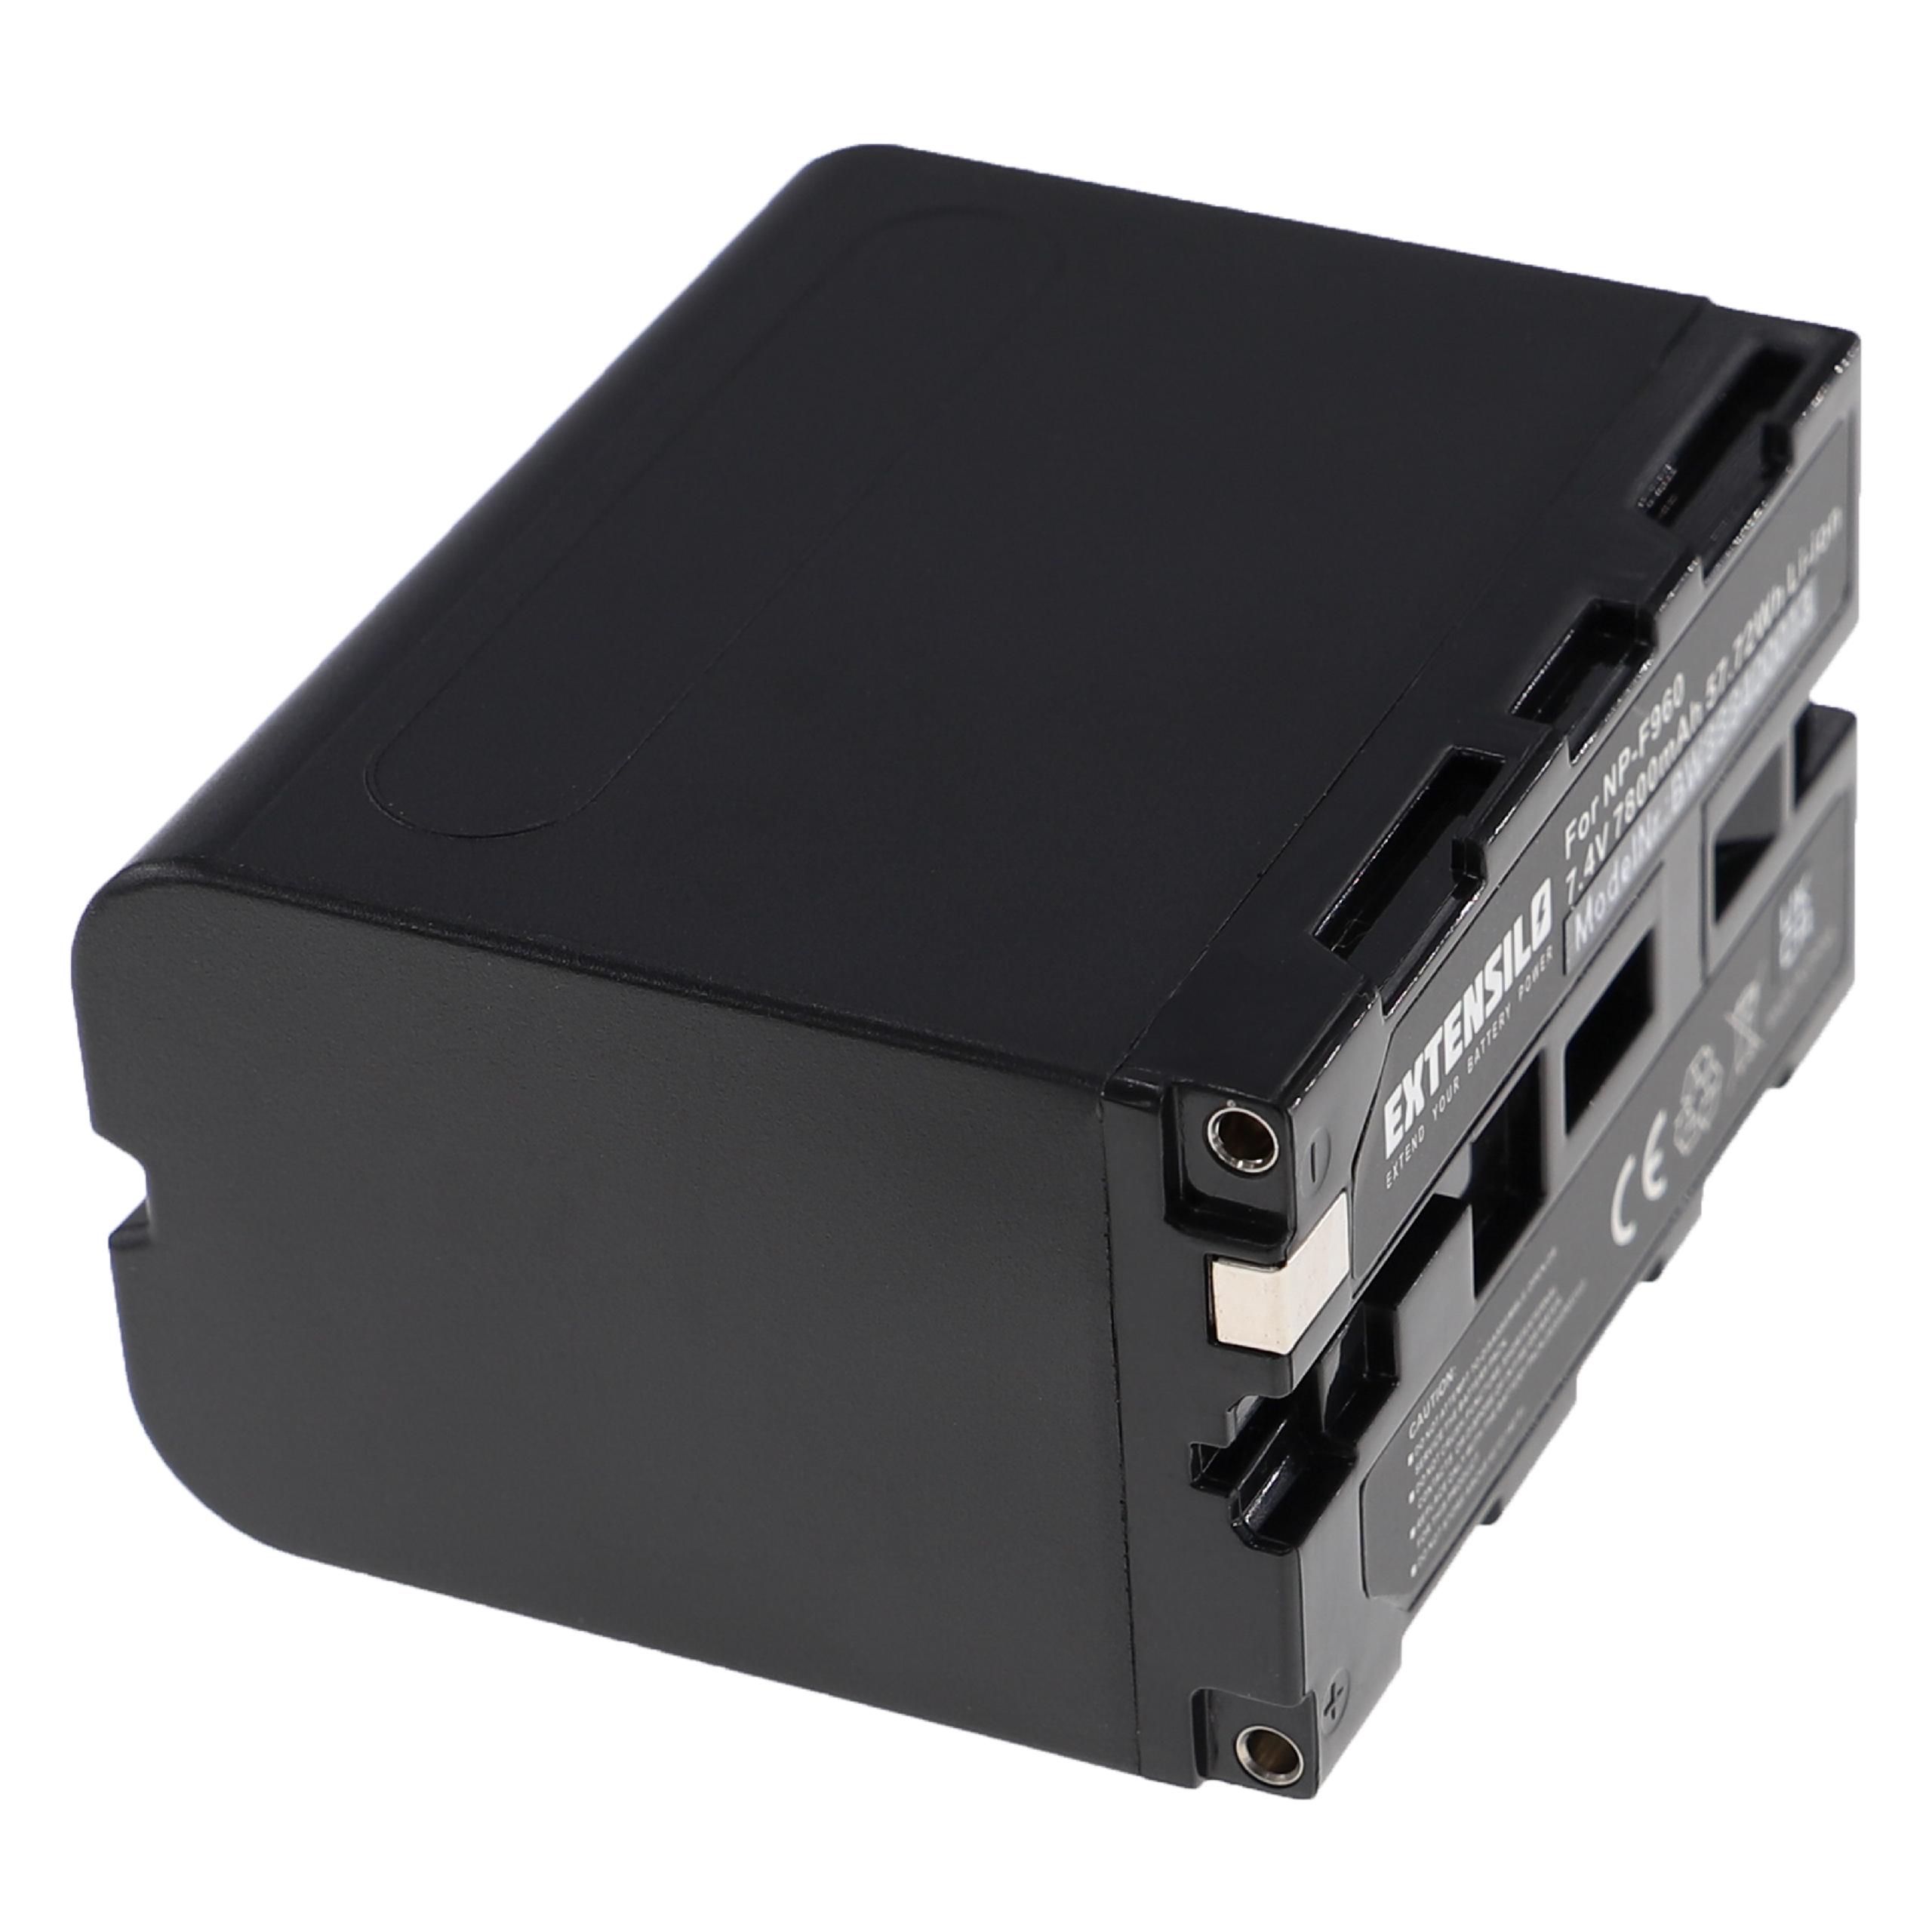 Akumulator do aparatu cyfrowego zamiennik Grundig BP-10, BP-9, BP-8 - 7800 mAh 7,4 V Li-Ion